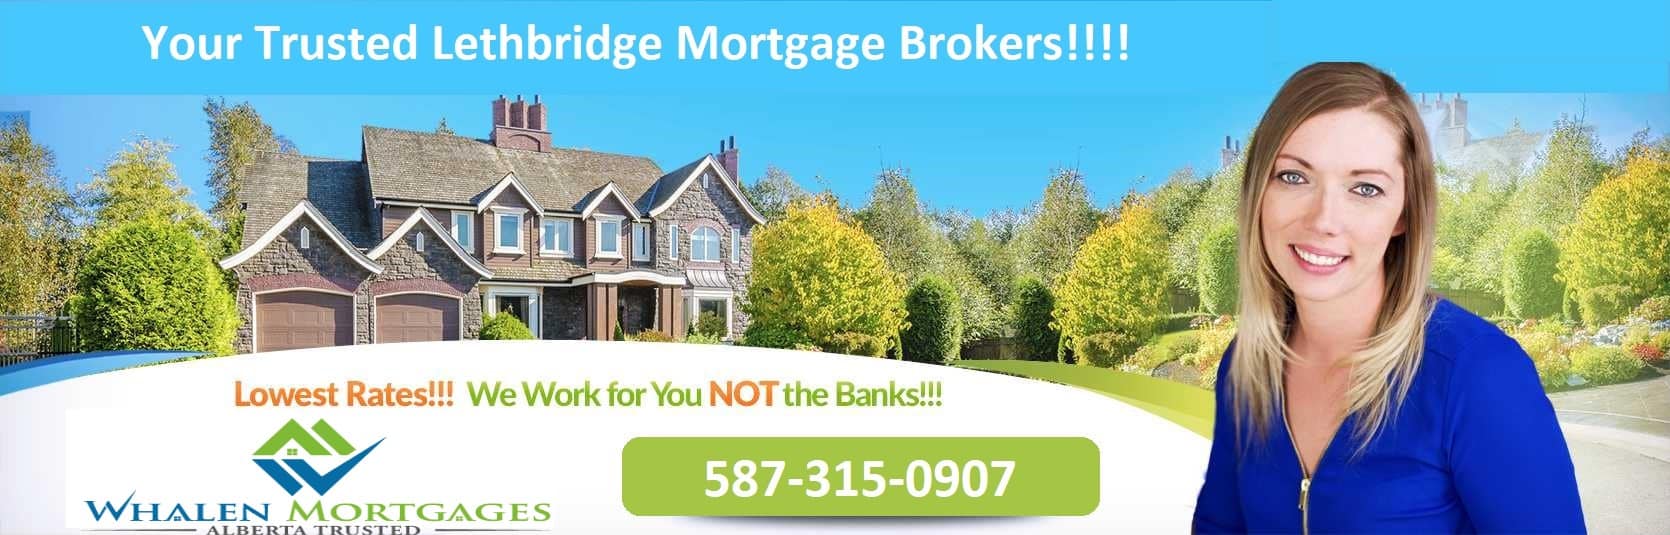 Lethbridge Mortgage Lenders ATB Bank 